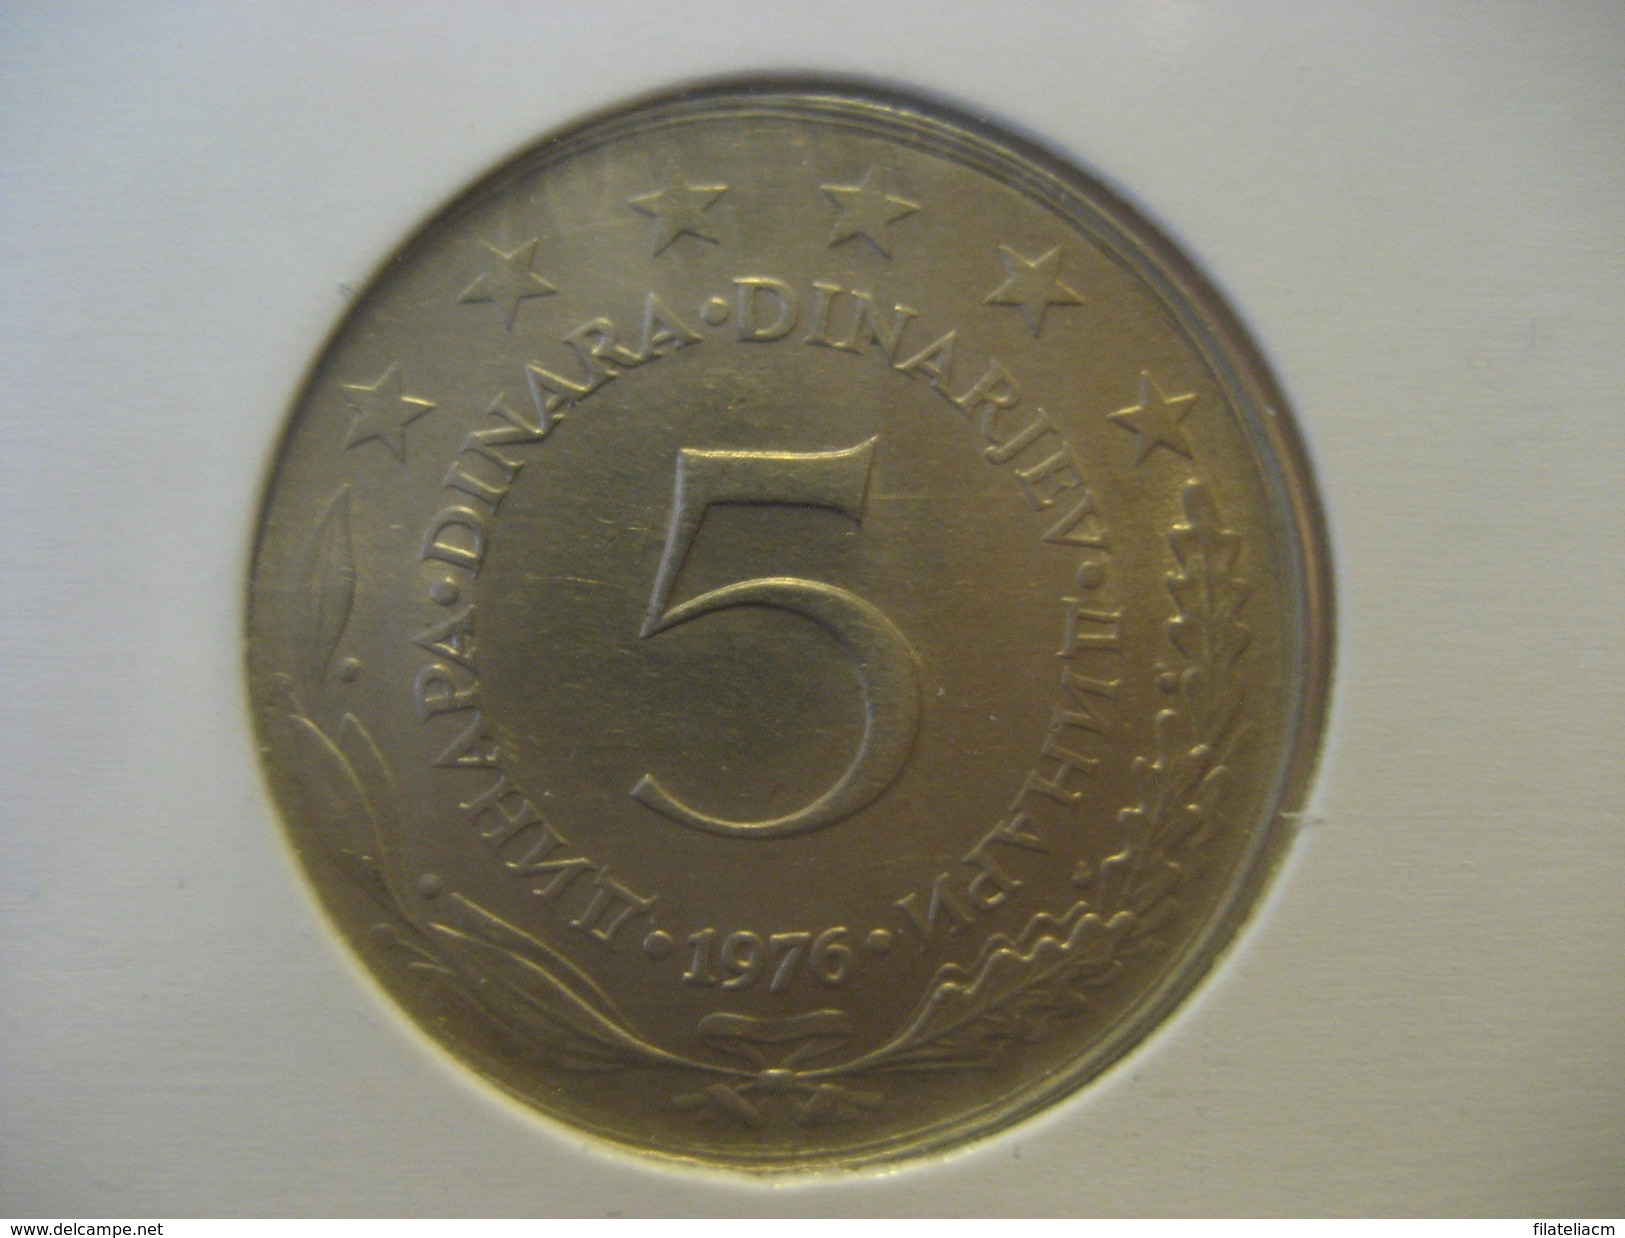 5 Dinar 1976 YUGOSLAVIA Yougoslavie Coin - Yougoslavie